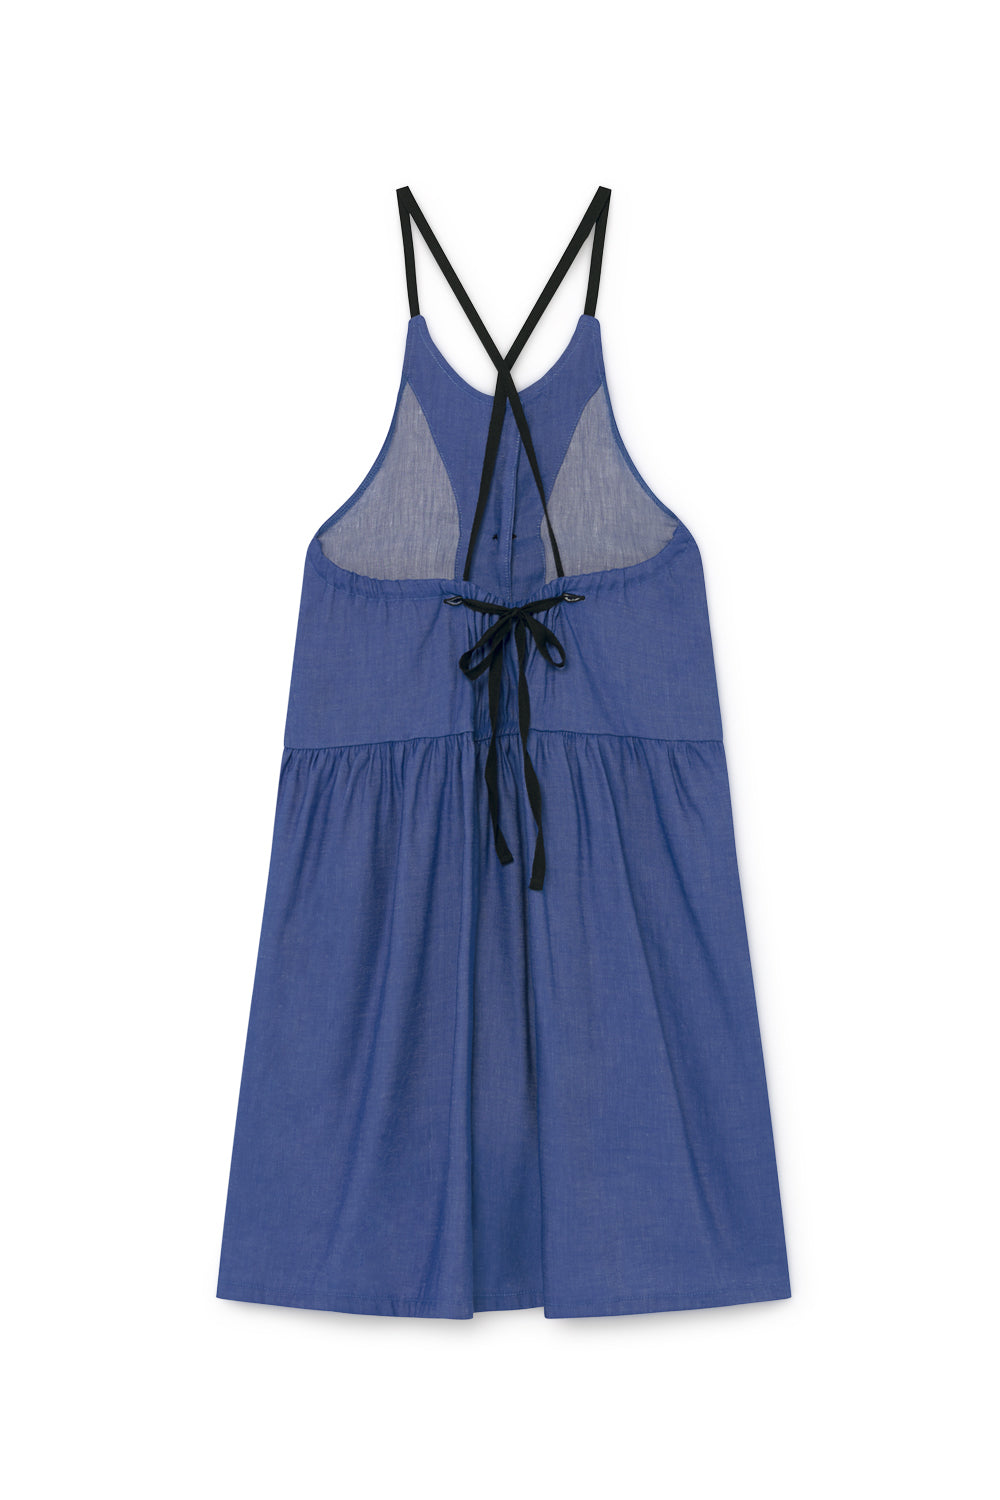 Little Creative Factory Soft Denim Apron Dress - Blue